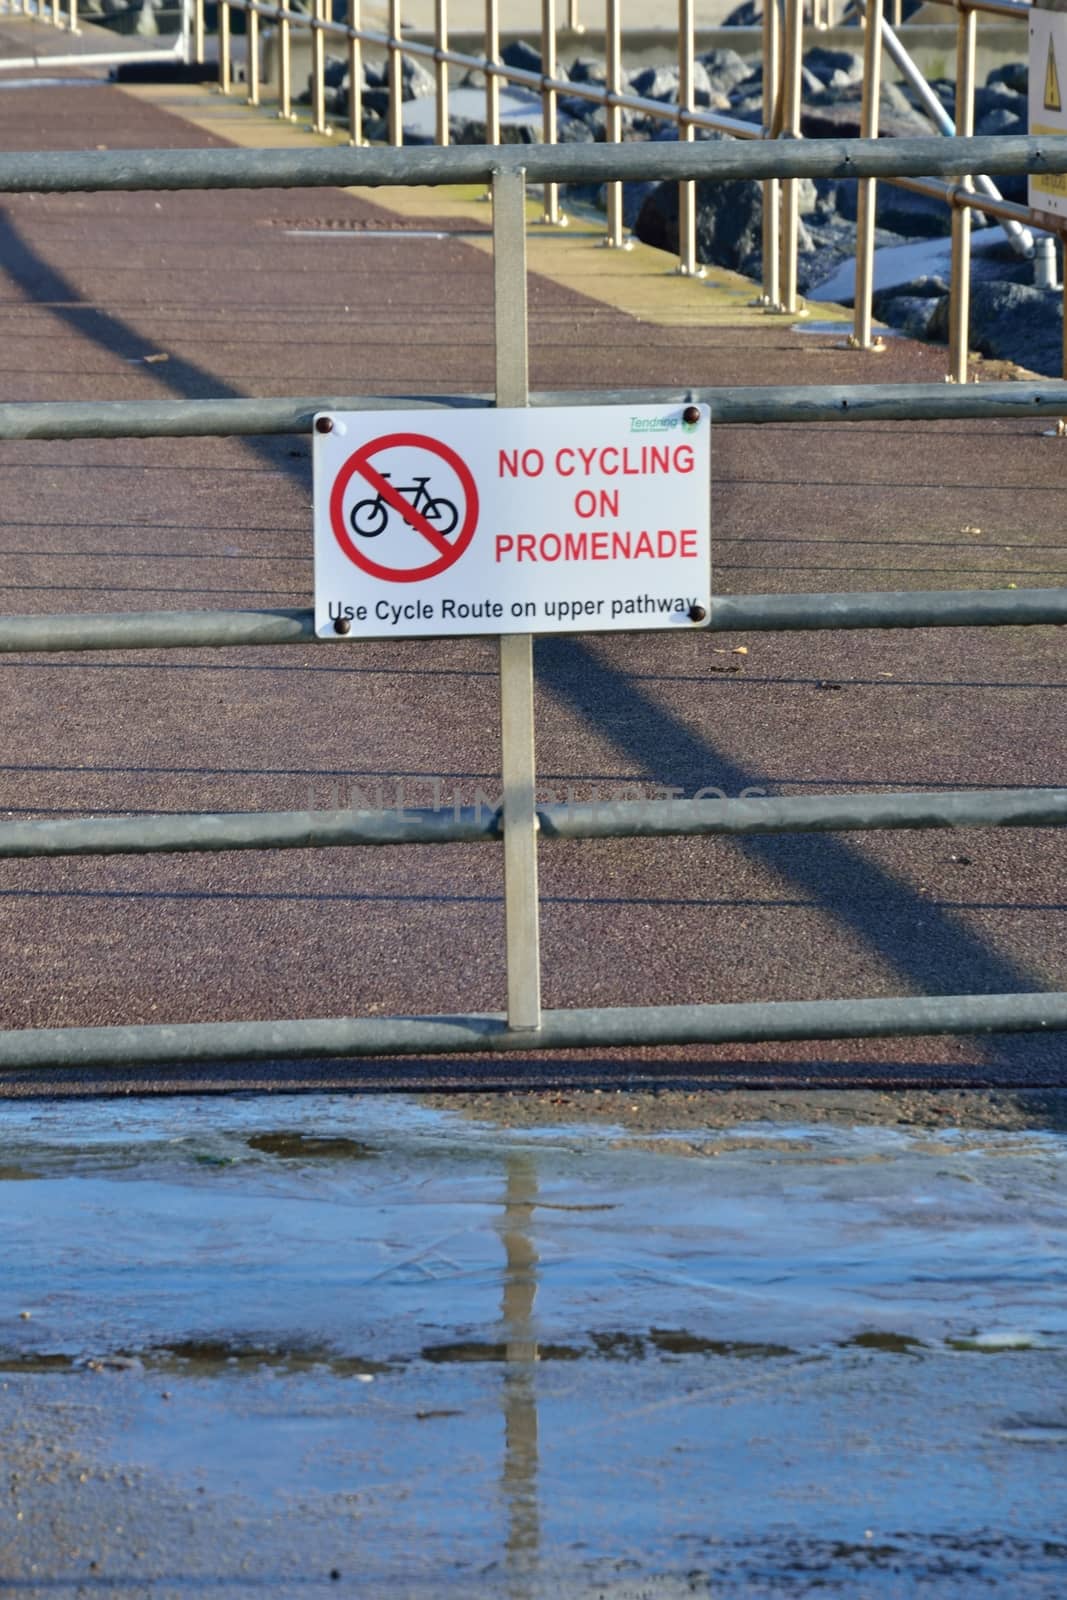 No Cycling on promenade sign